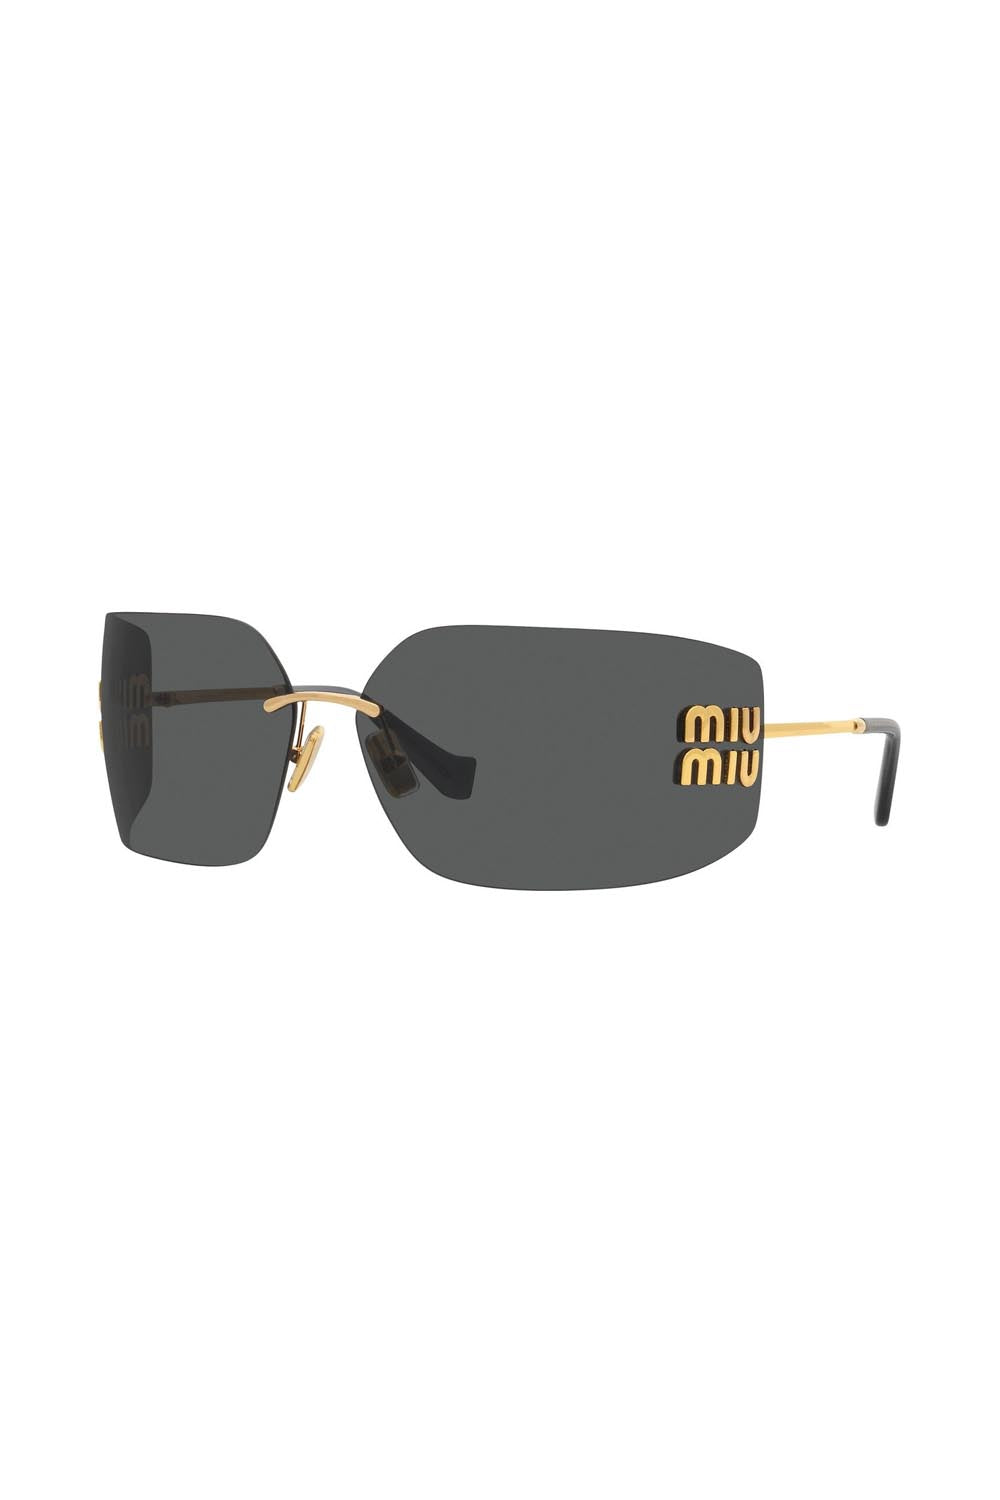 Miu Miu Sunglasses MU 54YS Gold Dark Grey